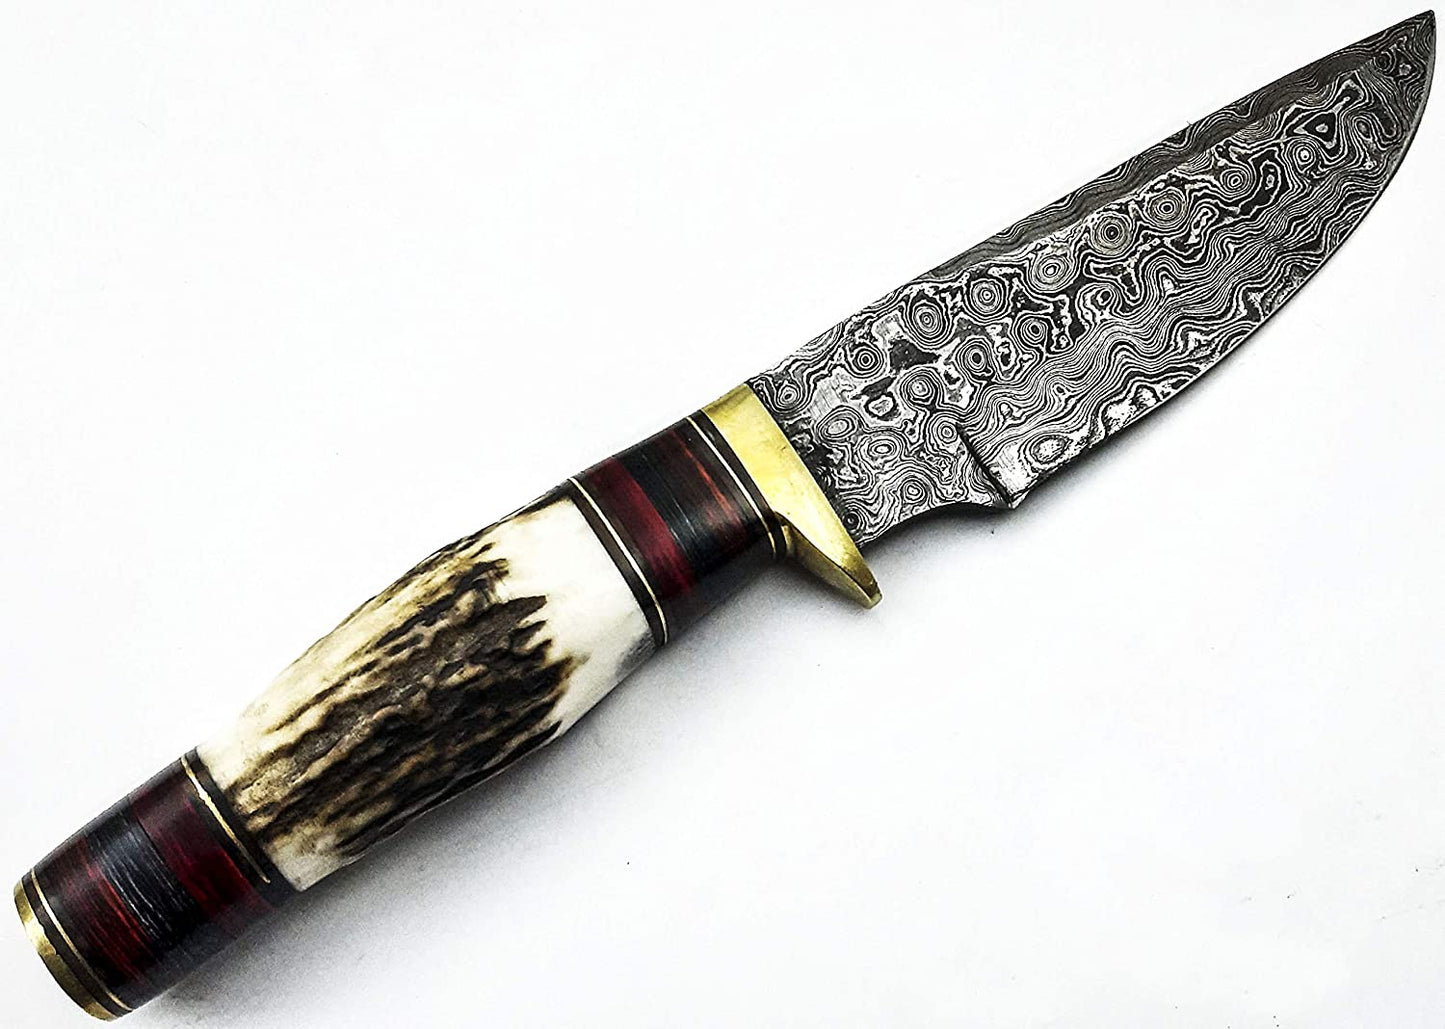 Shard Damascus Steel Knife Handmade Hunting Knife RAIN Drop Pattern 10" Knife STAG/Antler Handle with Sheath